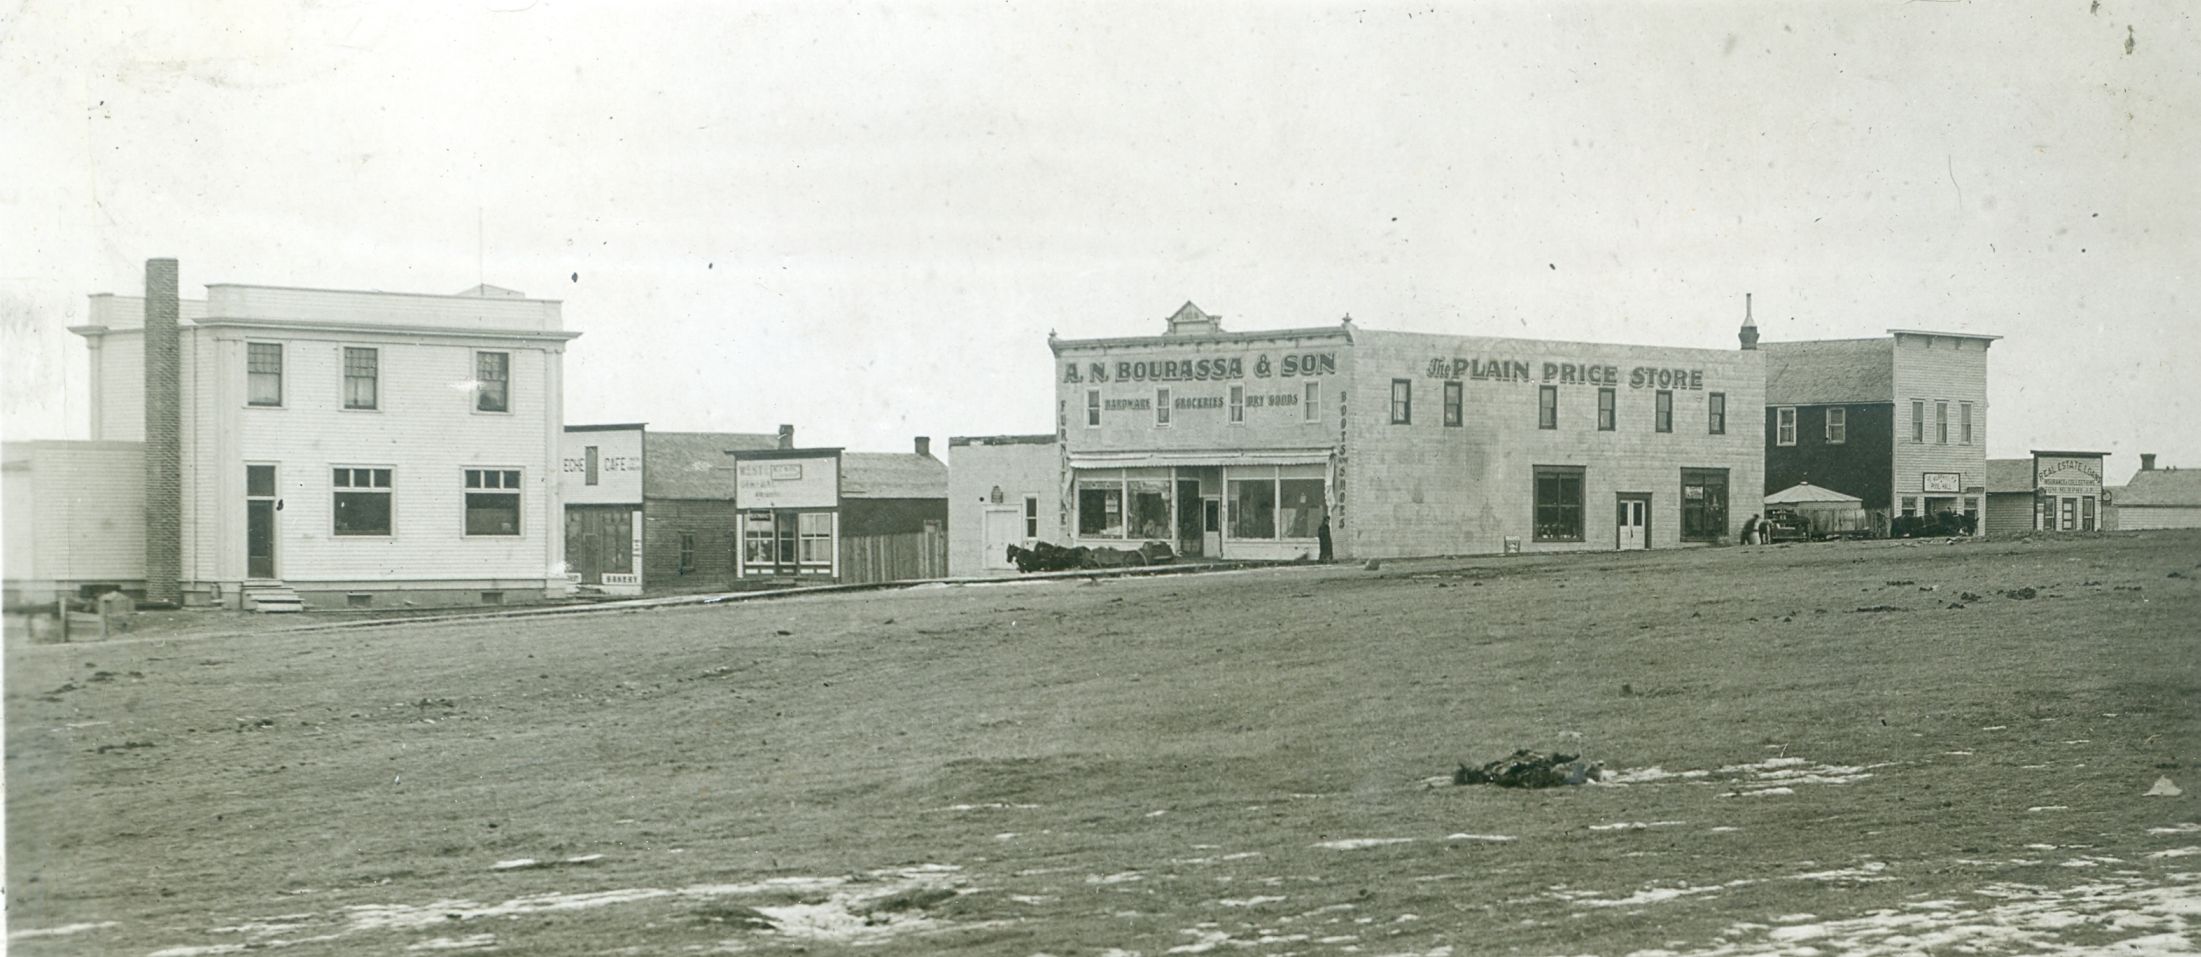 Picture of Bourassa and Sons Store in LaFleche Saskatchewan